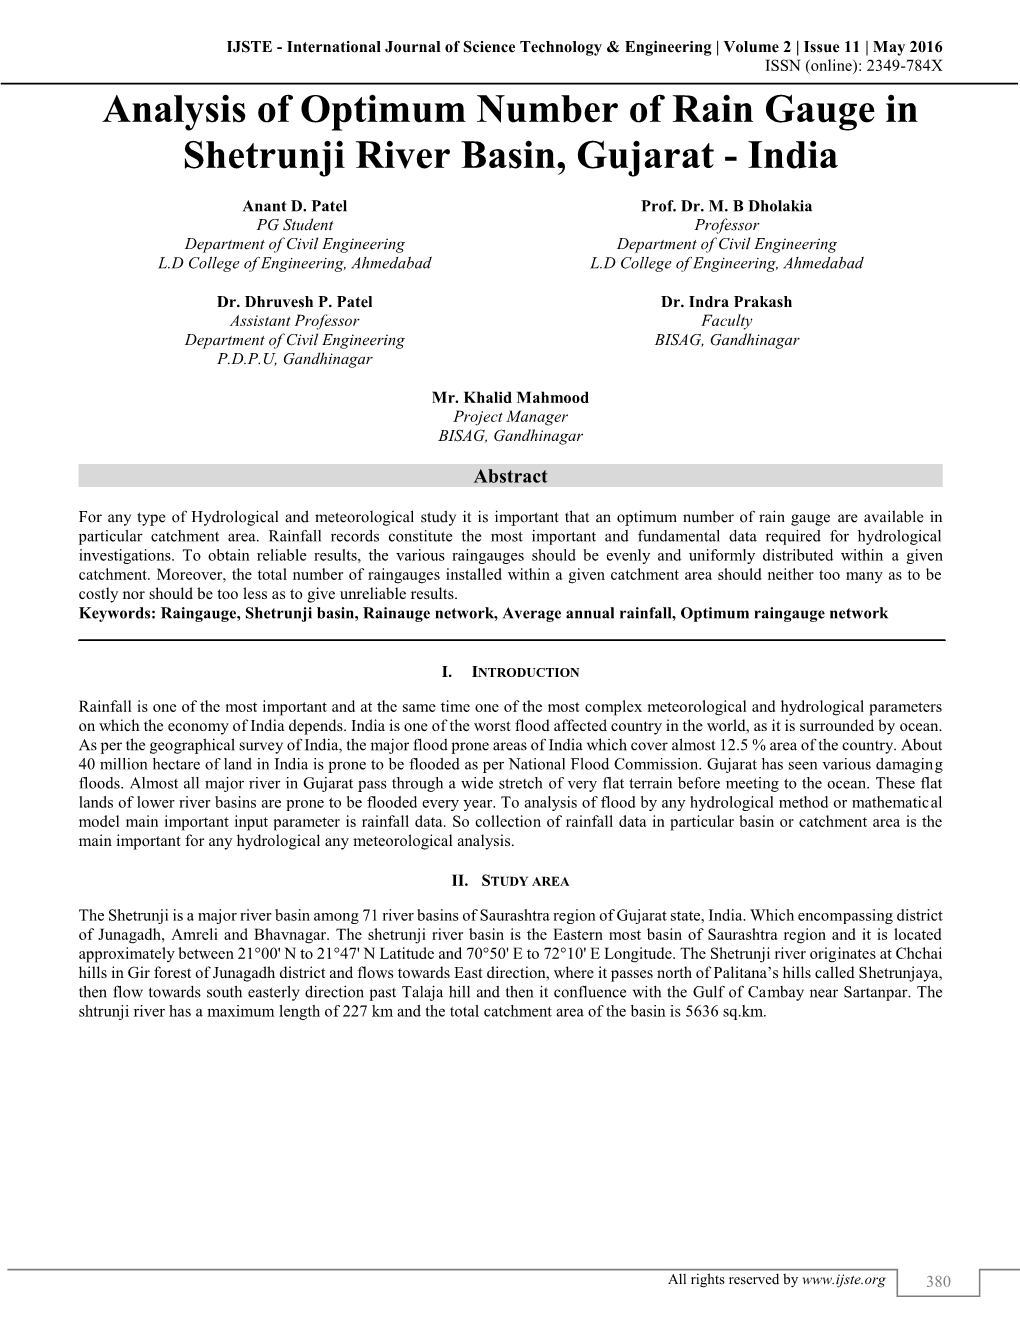 Analysis of Optimum Number of Rain Gauge in Shetrunji River Basin, Gujarat - India (IJSTE/ Volume 2 / Issue 11 / 068)